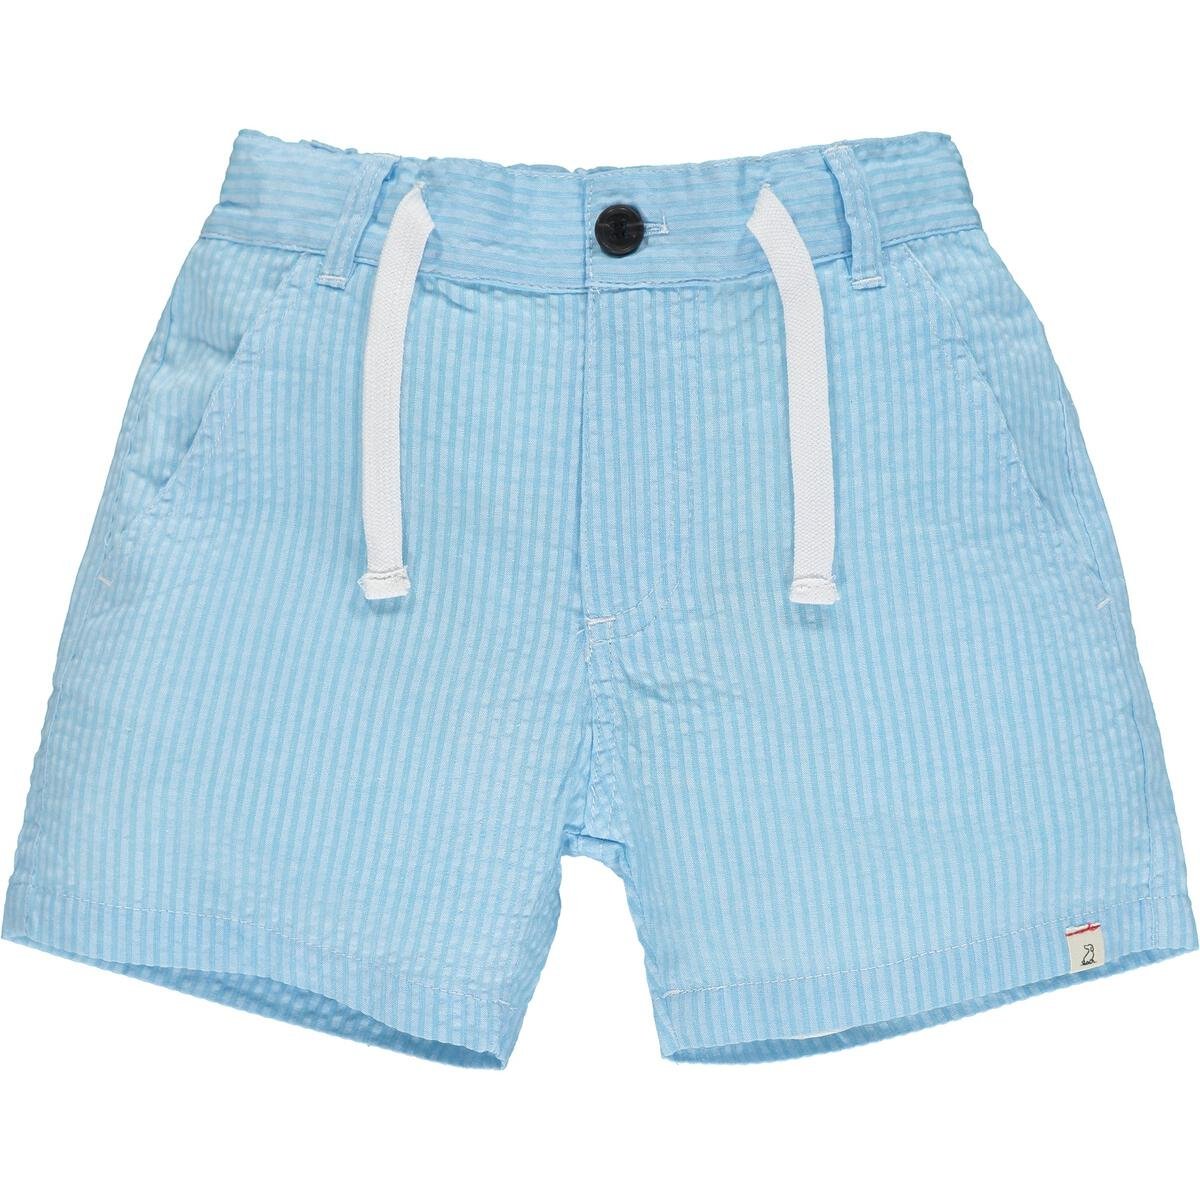 CREW aqua shorts - Nico